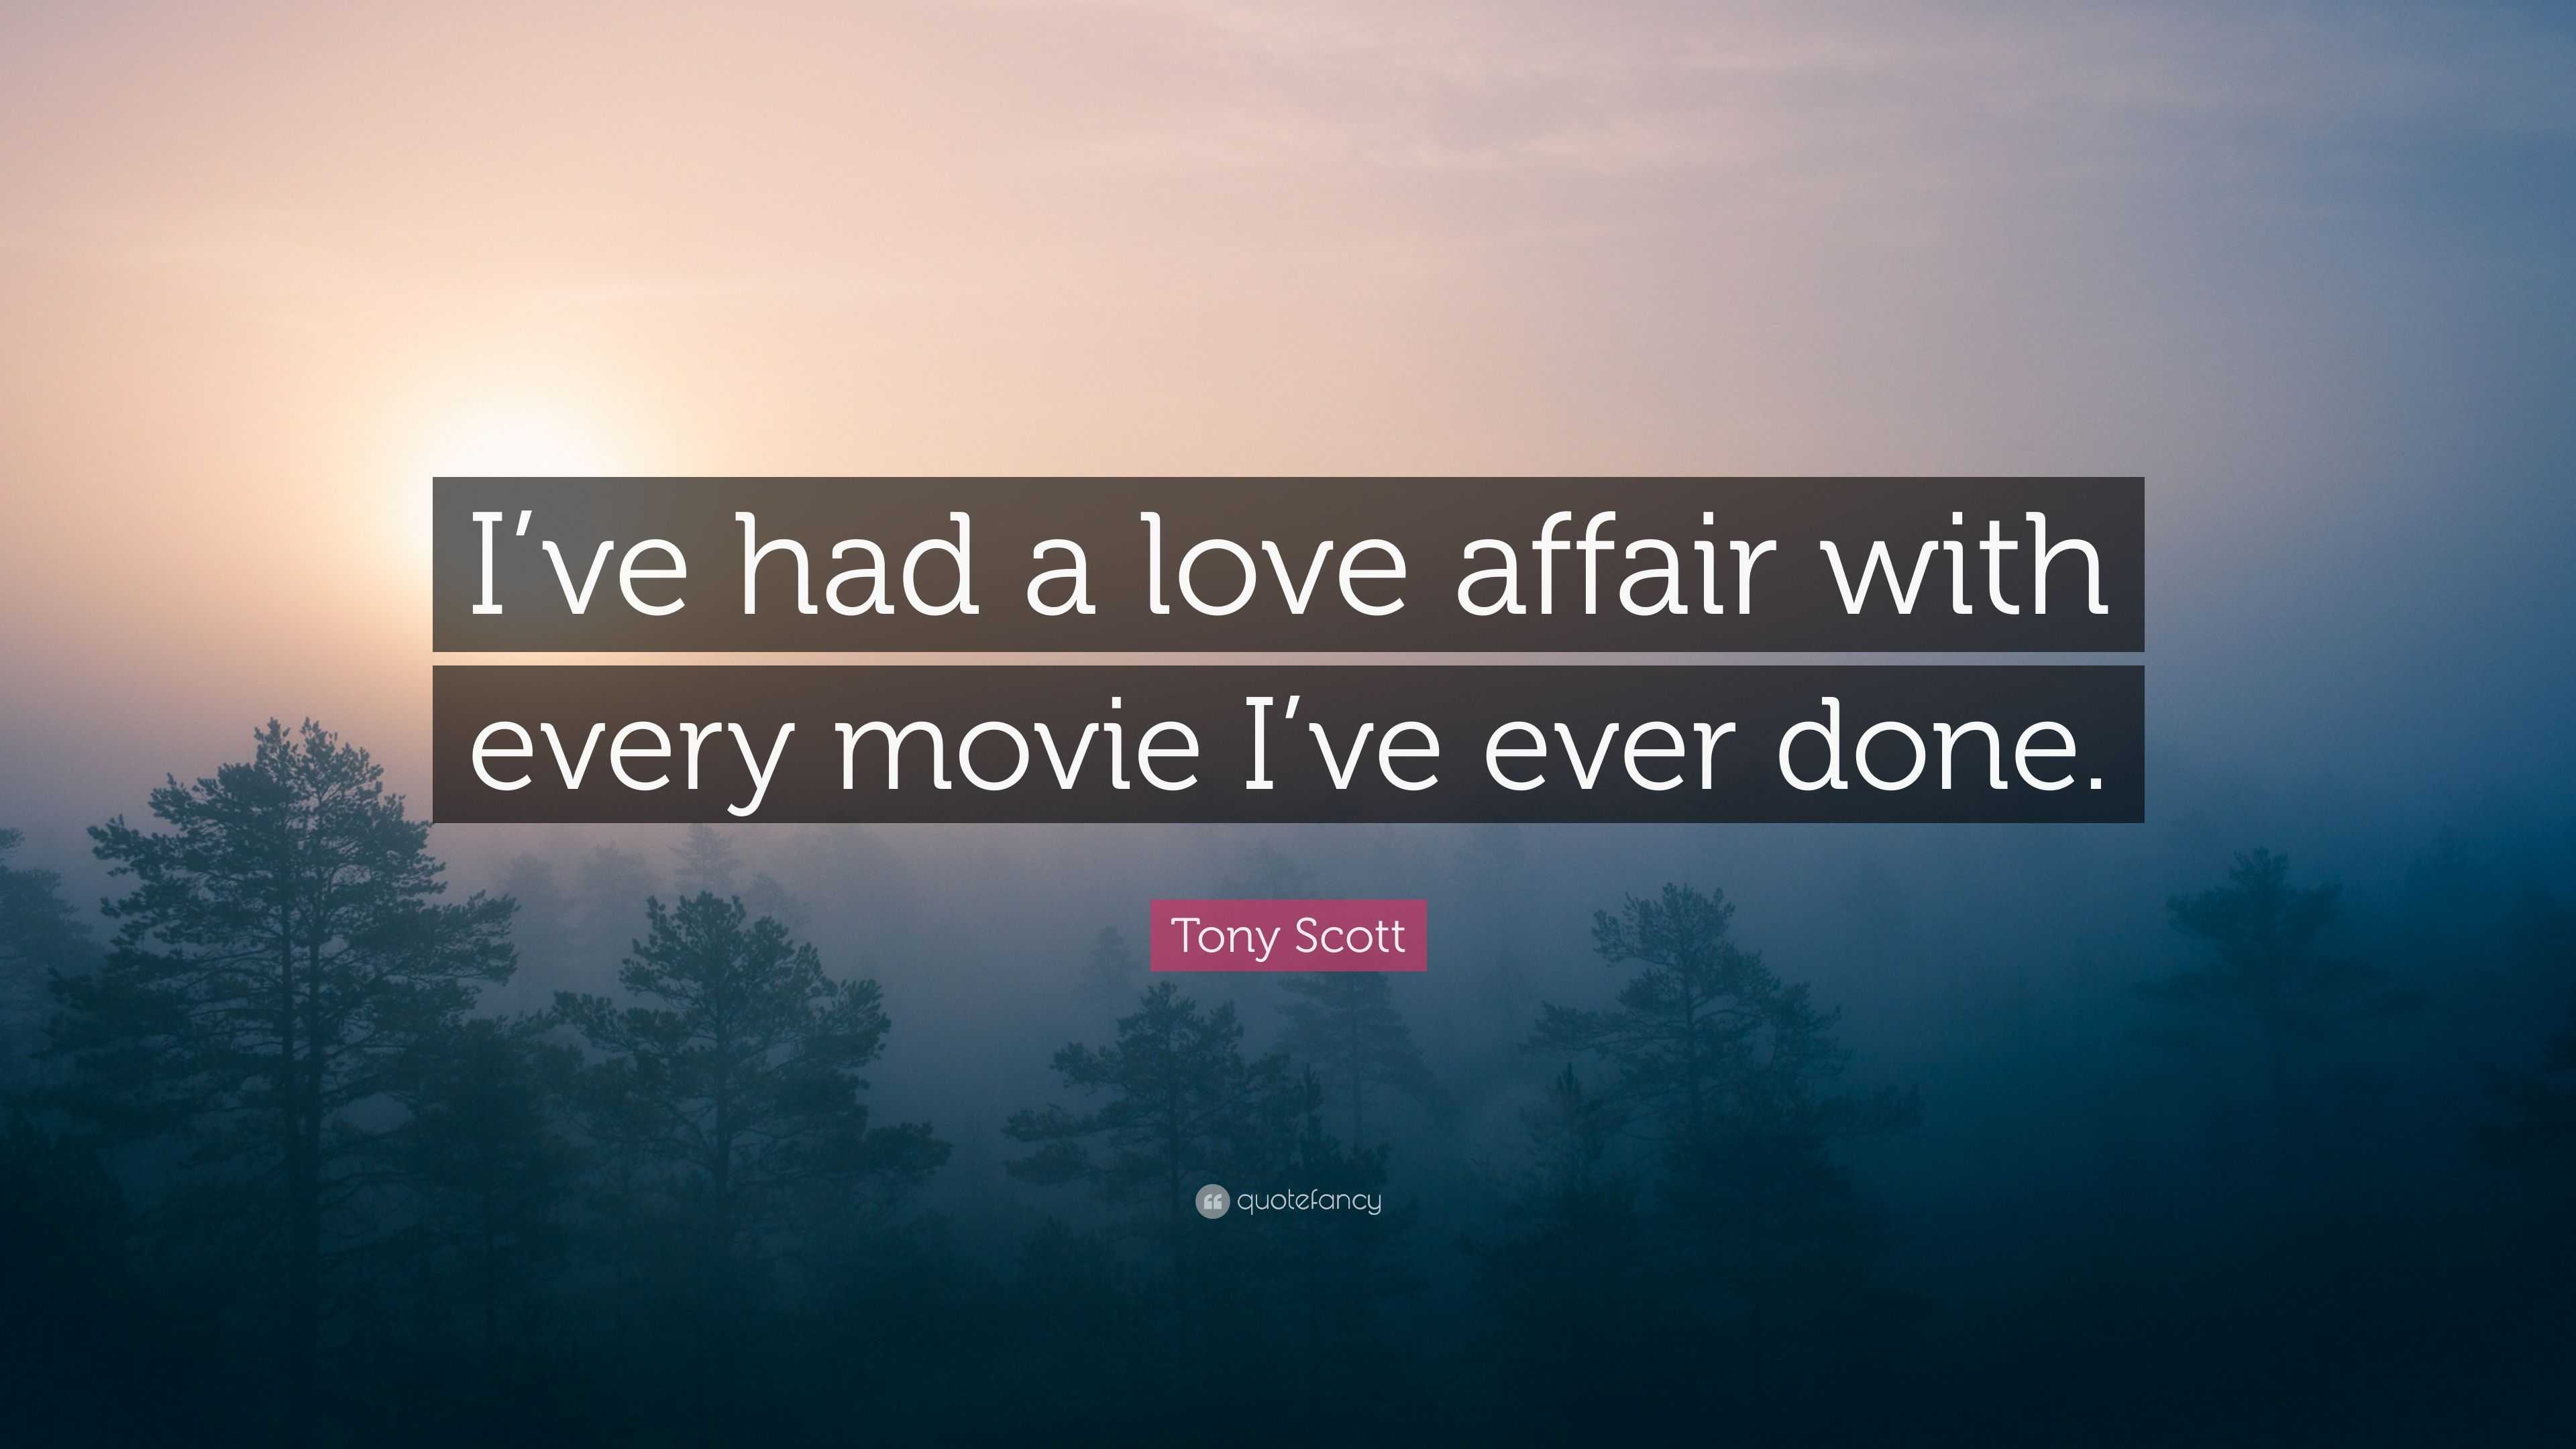 Tony Scott Quote “I ve had a love affair with every movie I